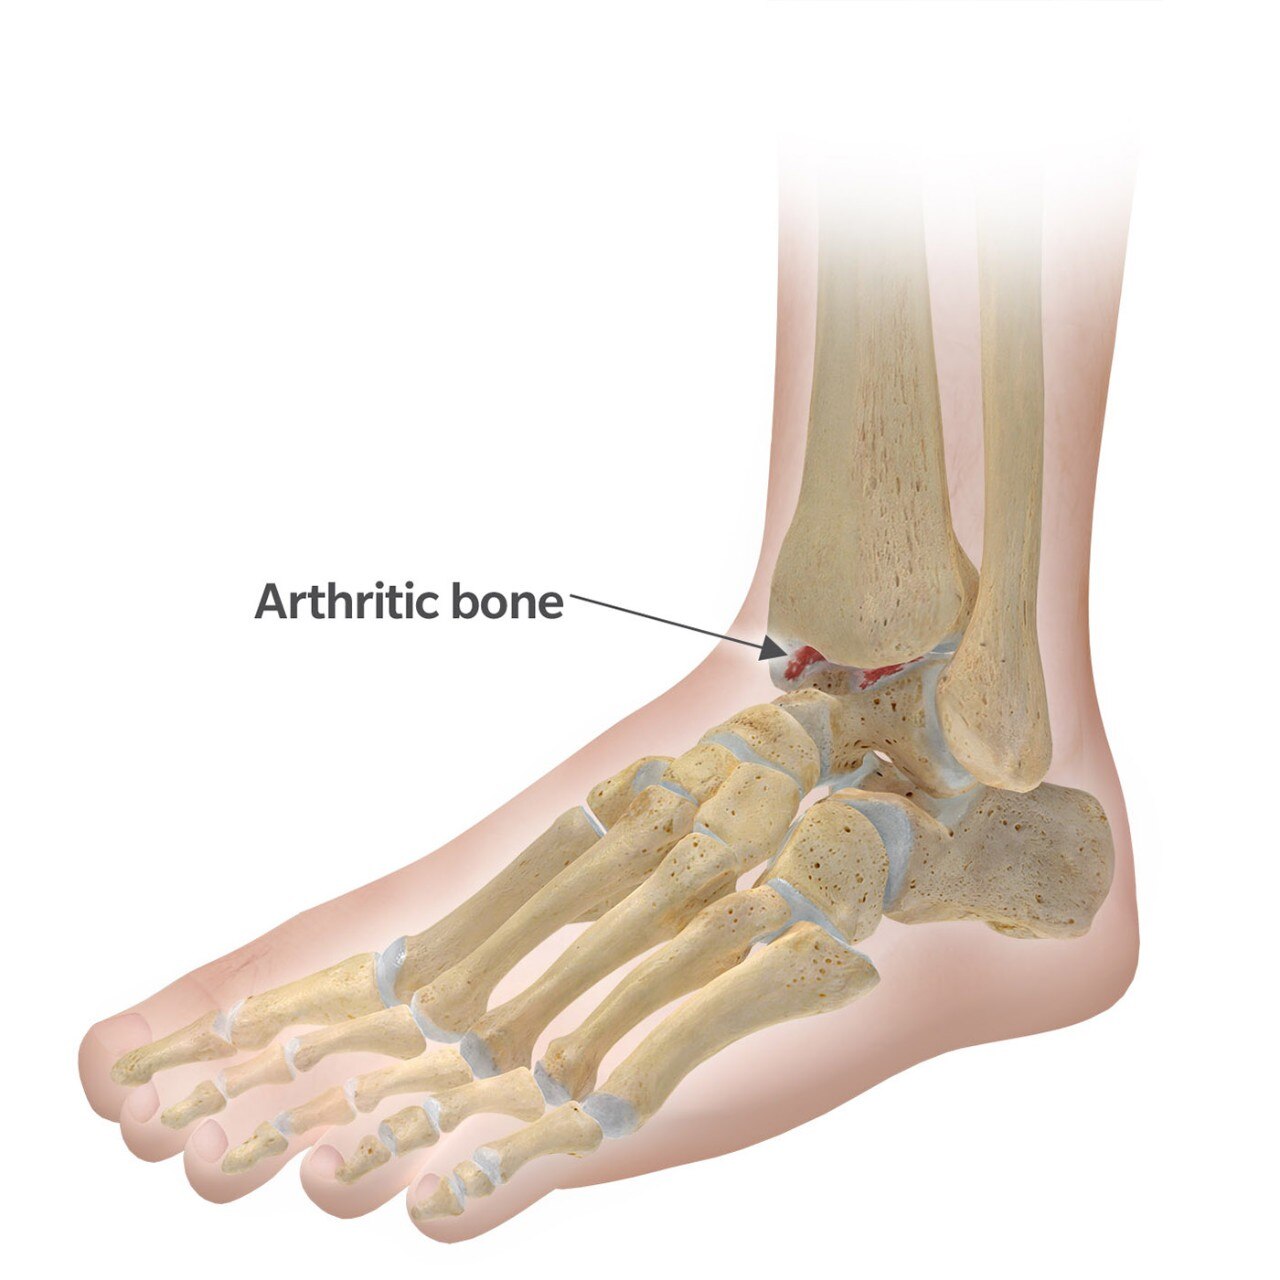 Arthritic bone